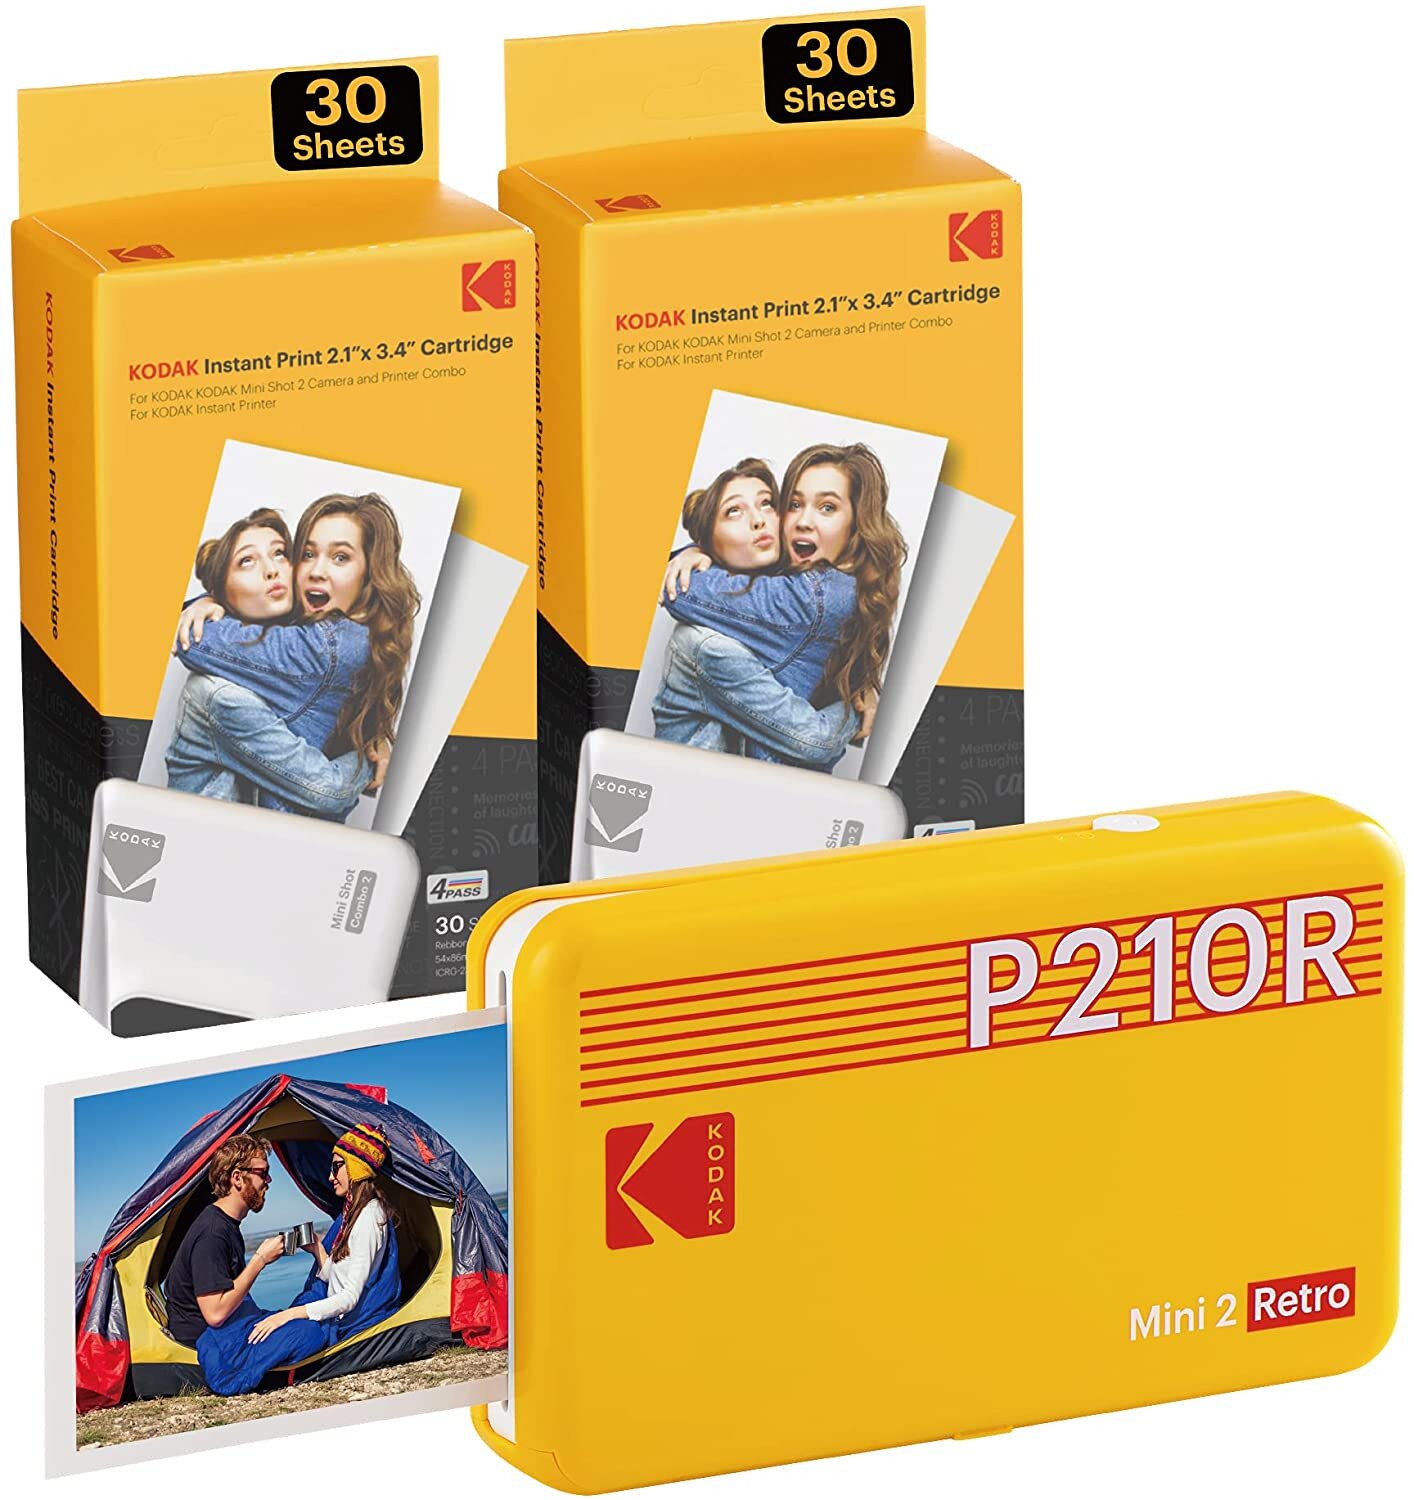 Buy Kodak Mini 2 Retro Portable Photo Printer (P210R) - Printer + 68 Sheets - Yellow online Worldwide - Tejar.com